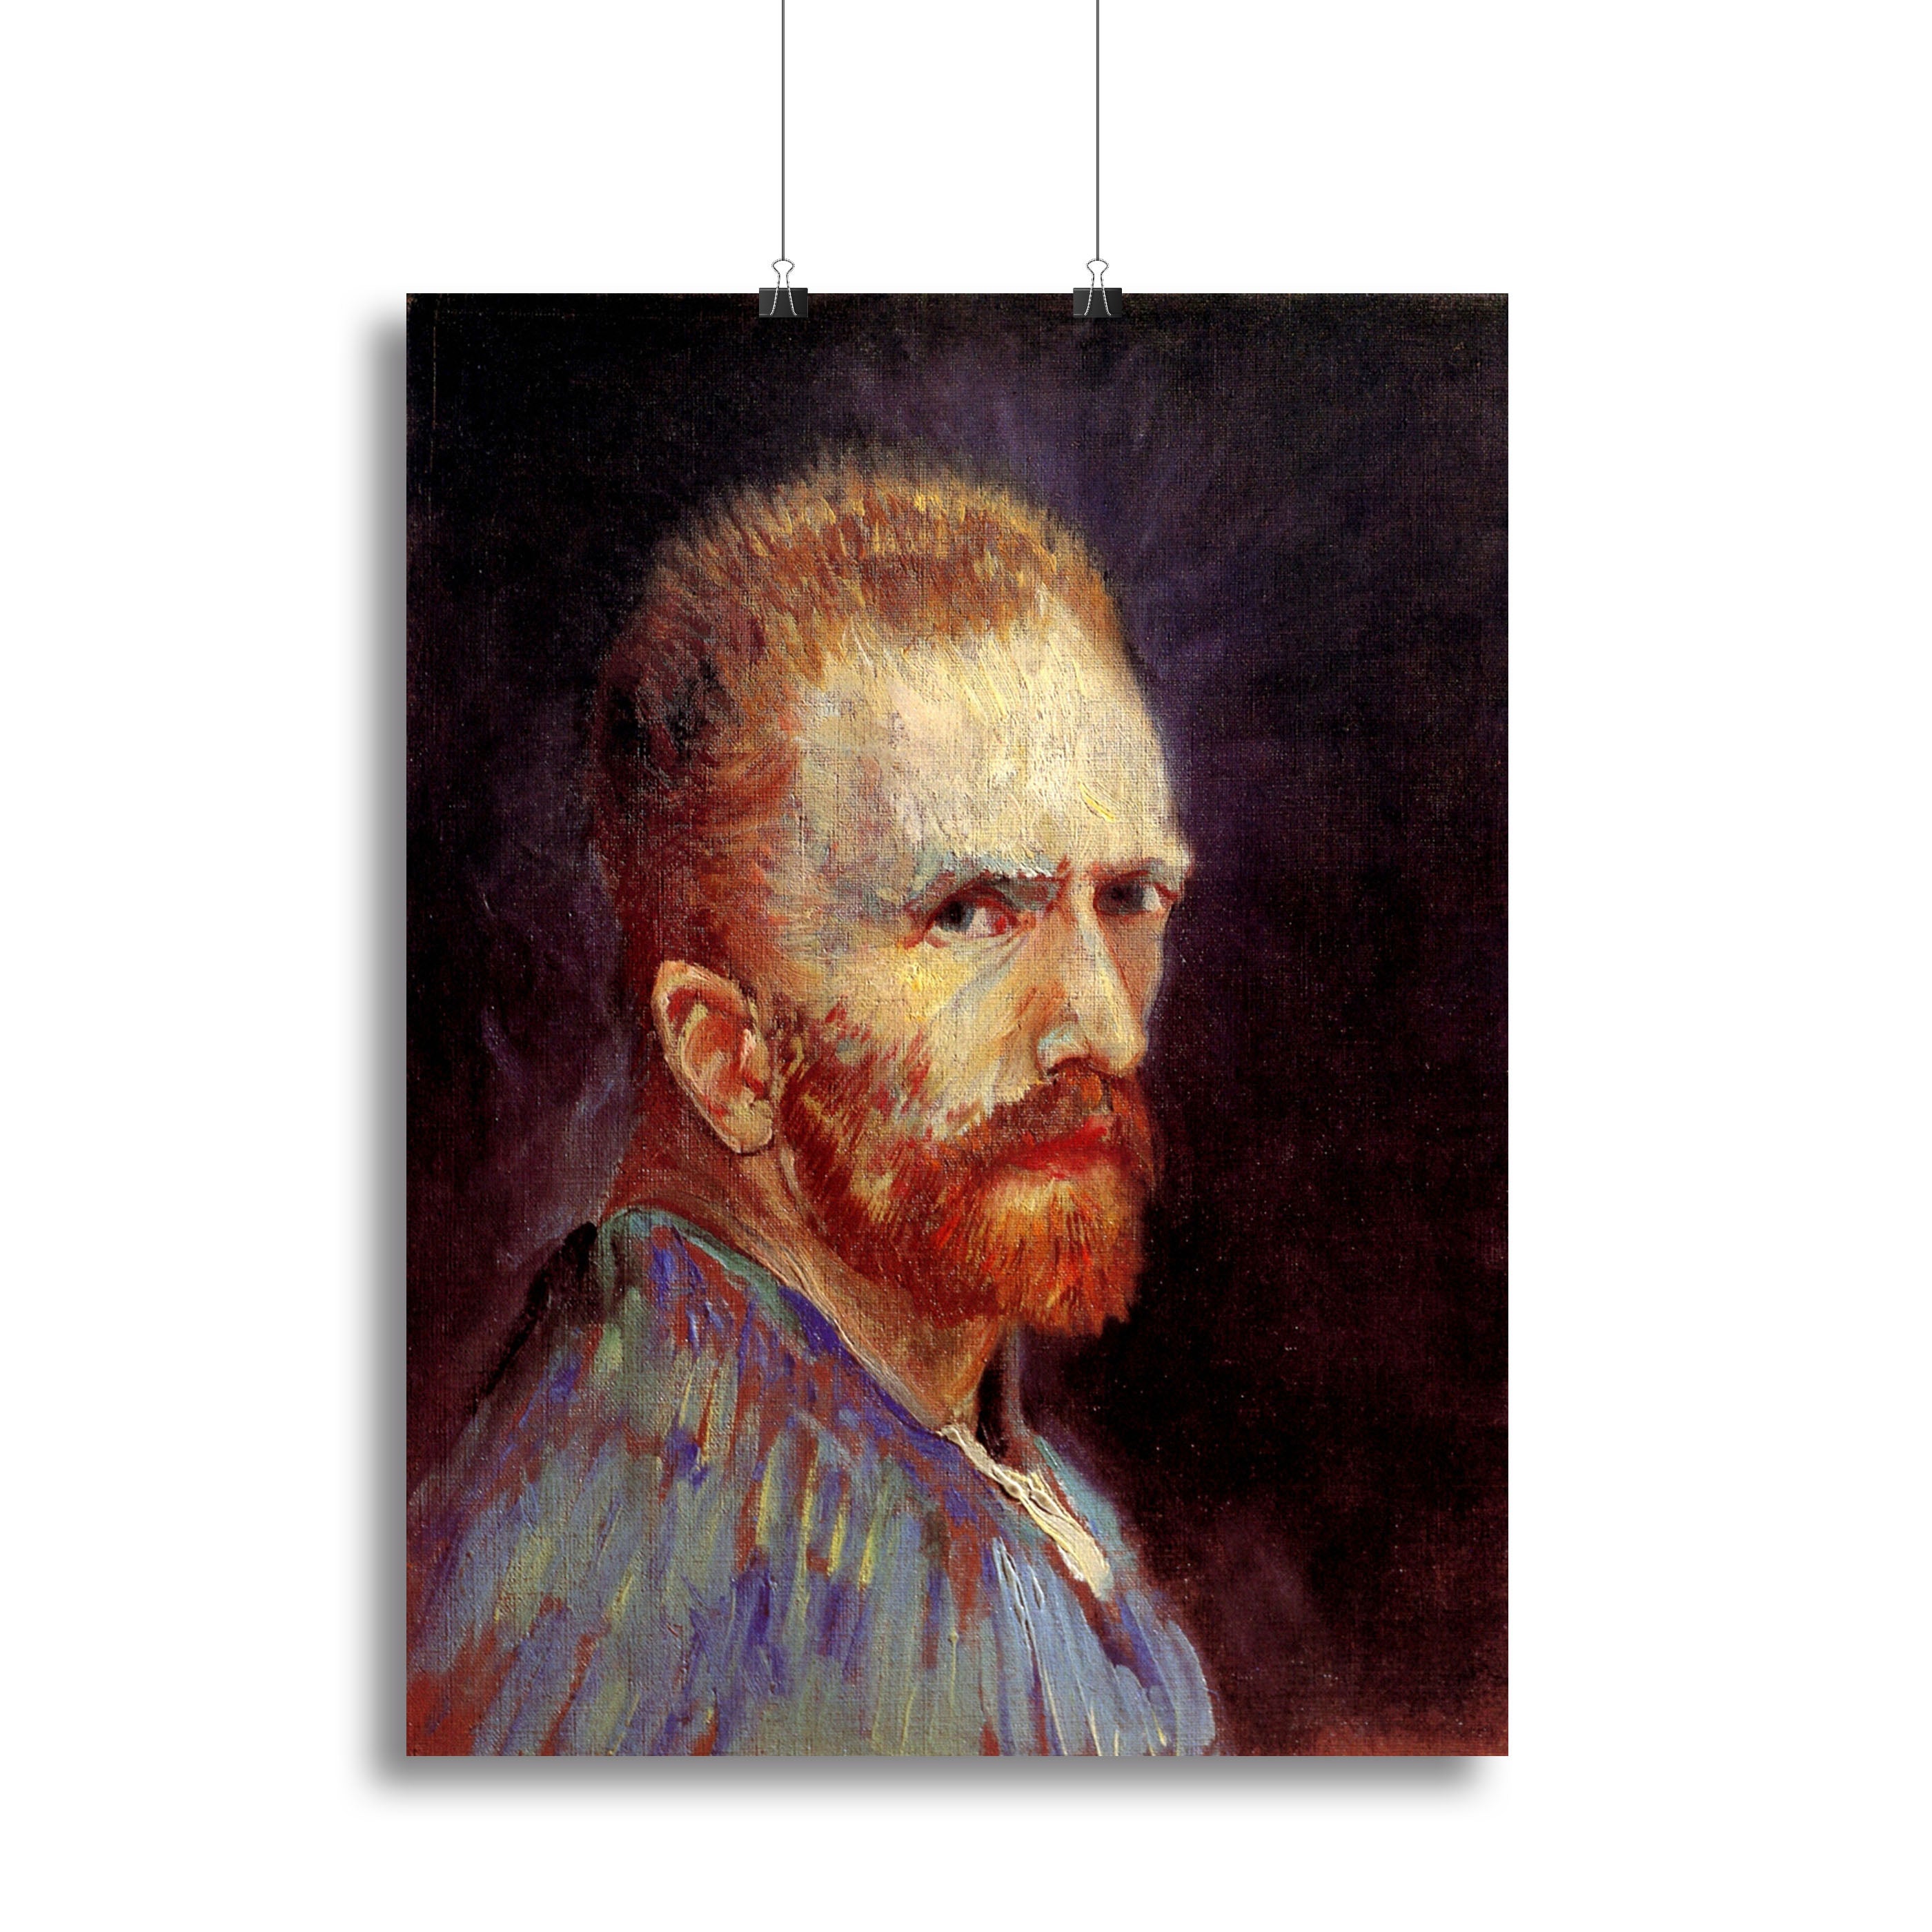 Self-Portrait 9 by Van Gogh Canvas Print or Poster - Canvas Art Rocks - 2